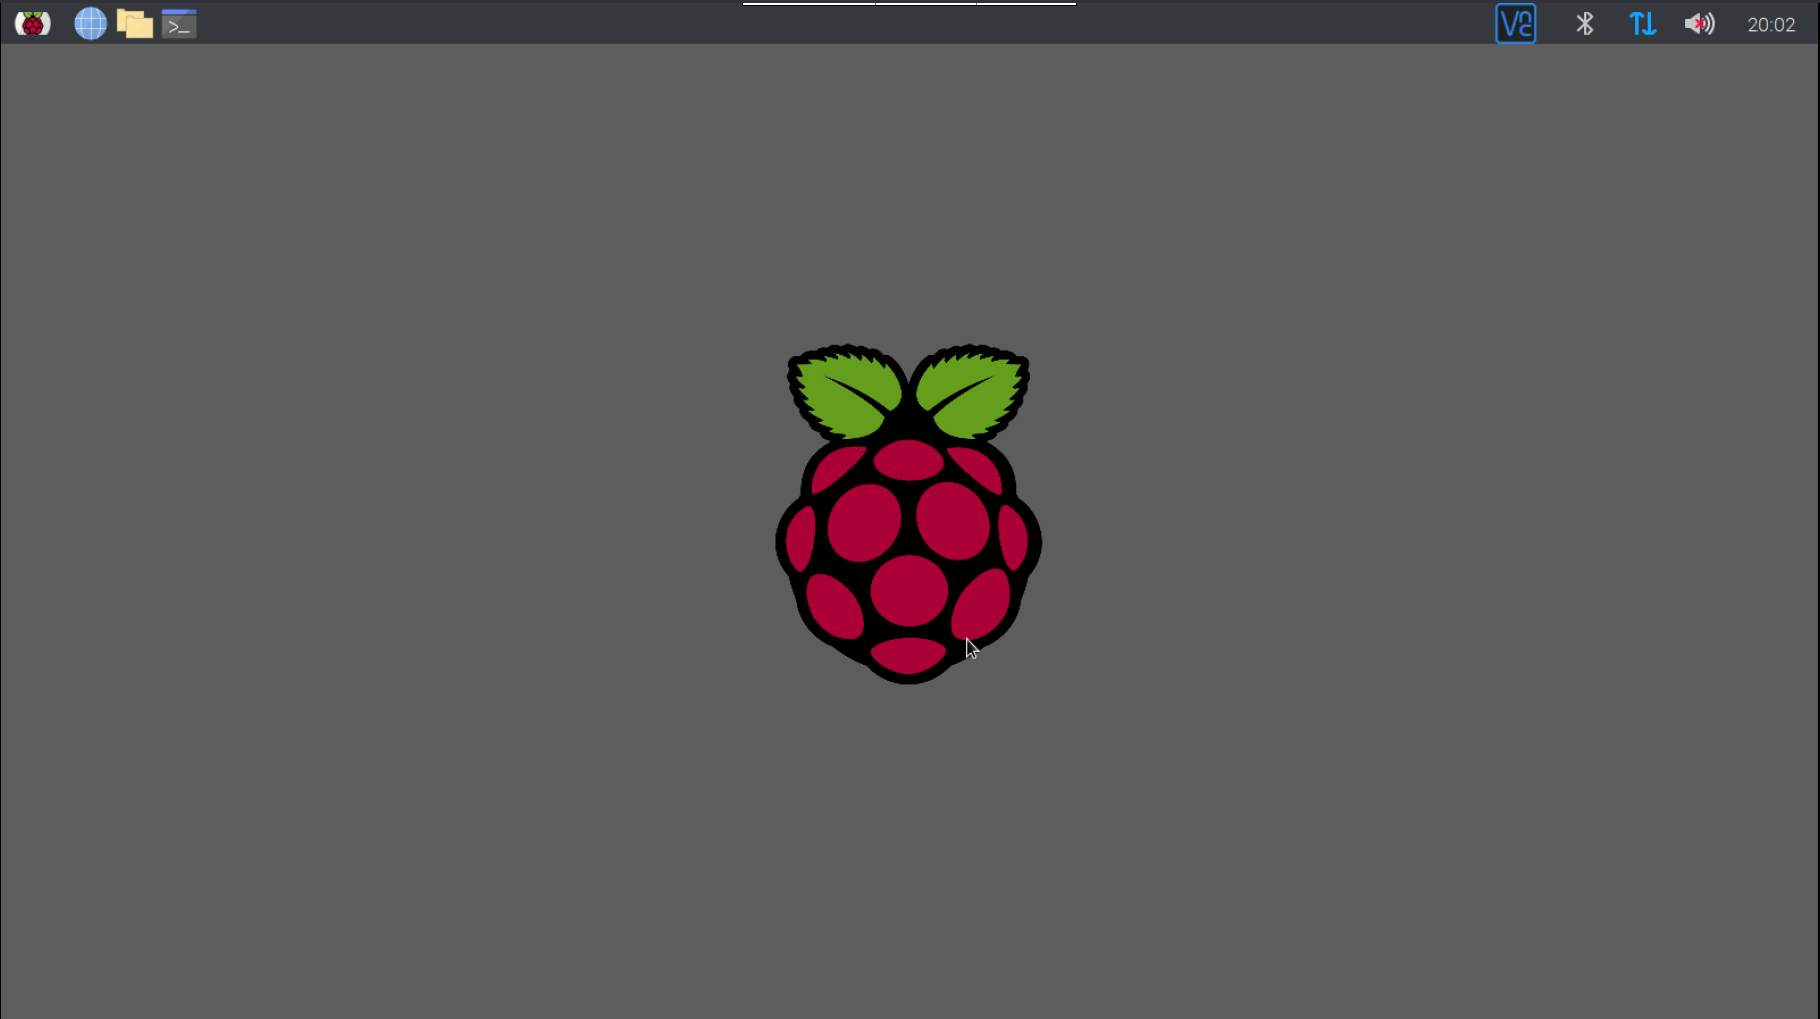 Raspbian is a Debian-based operating system for Raspberry Pi